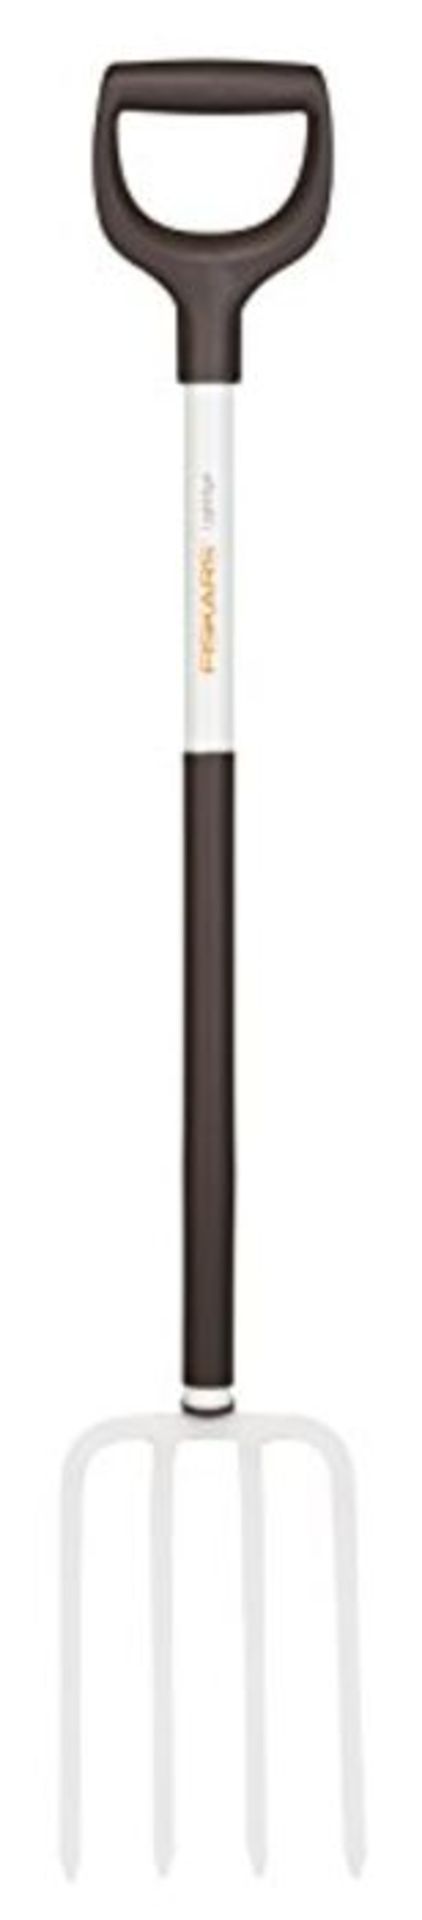 [INCOMPLETE] Fiskars Light Digging Fork, With 4 Tines, Length: 113 cm, High Steel Tine